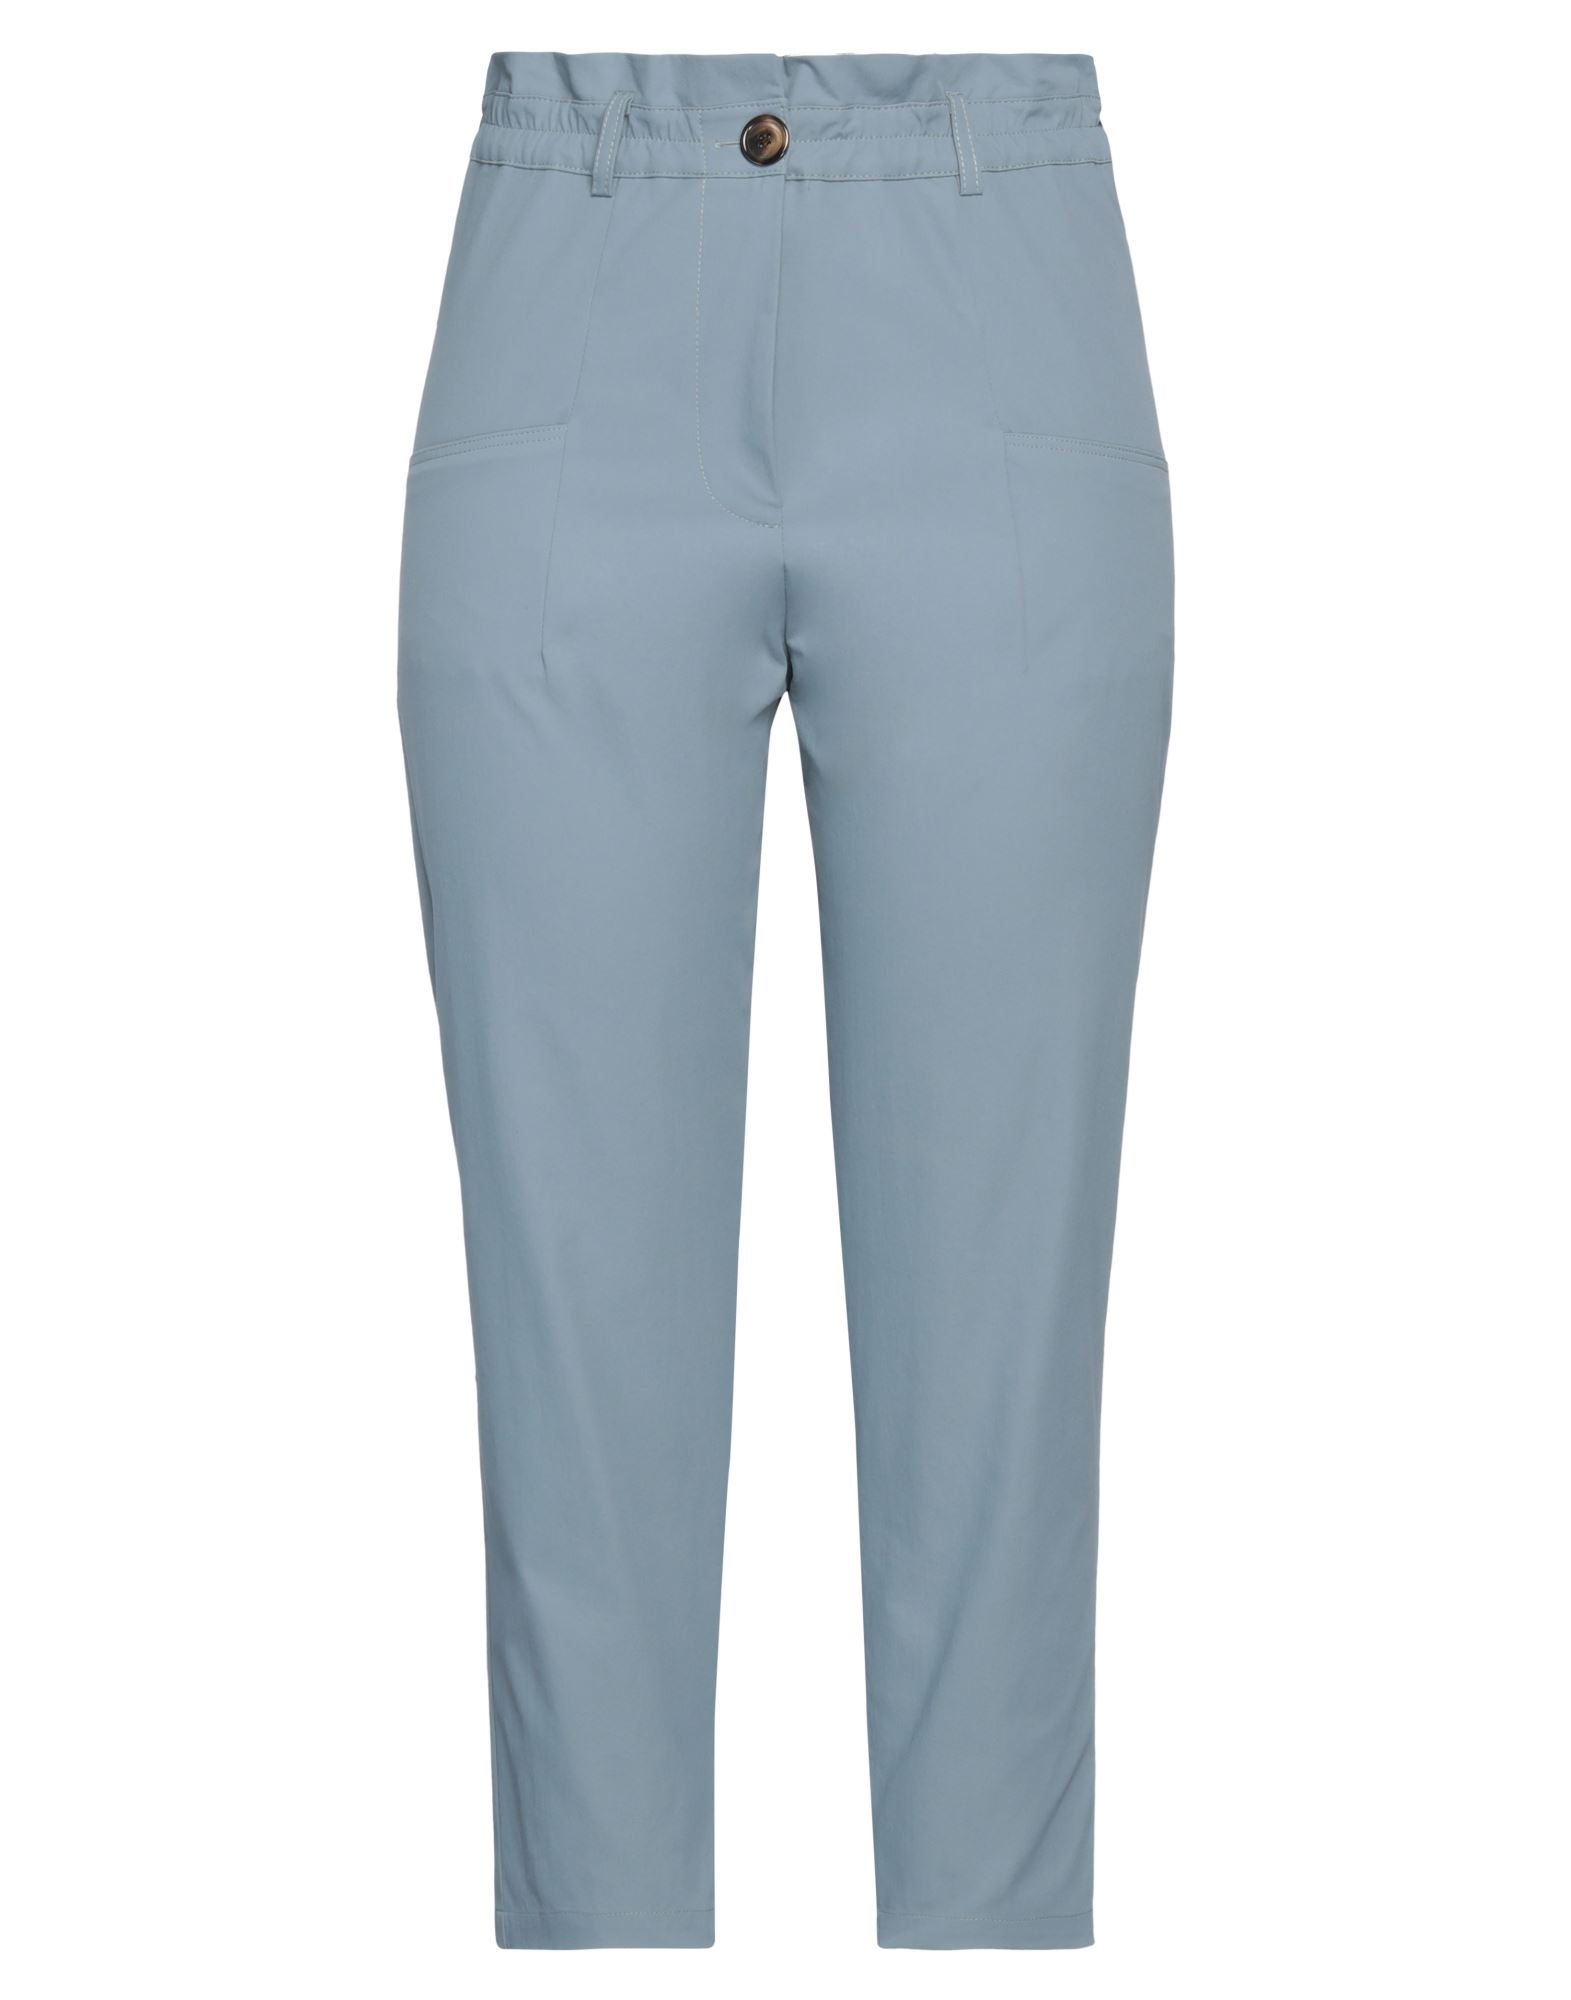 Collectors Club Pants In Grey